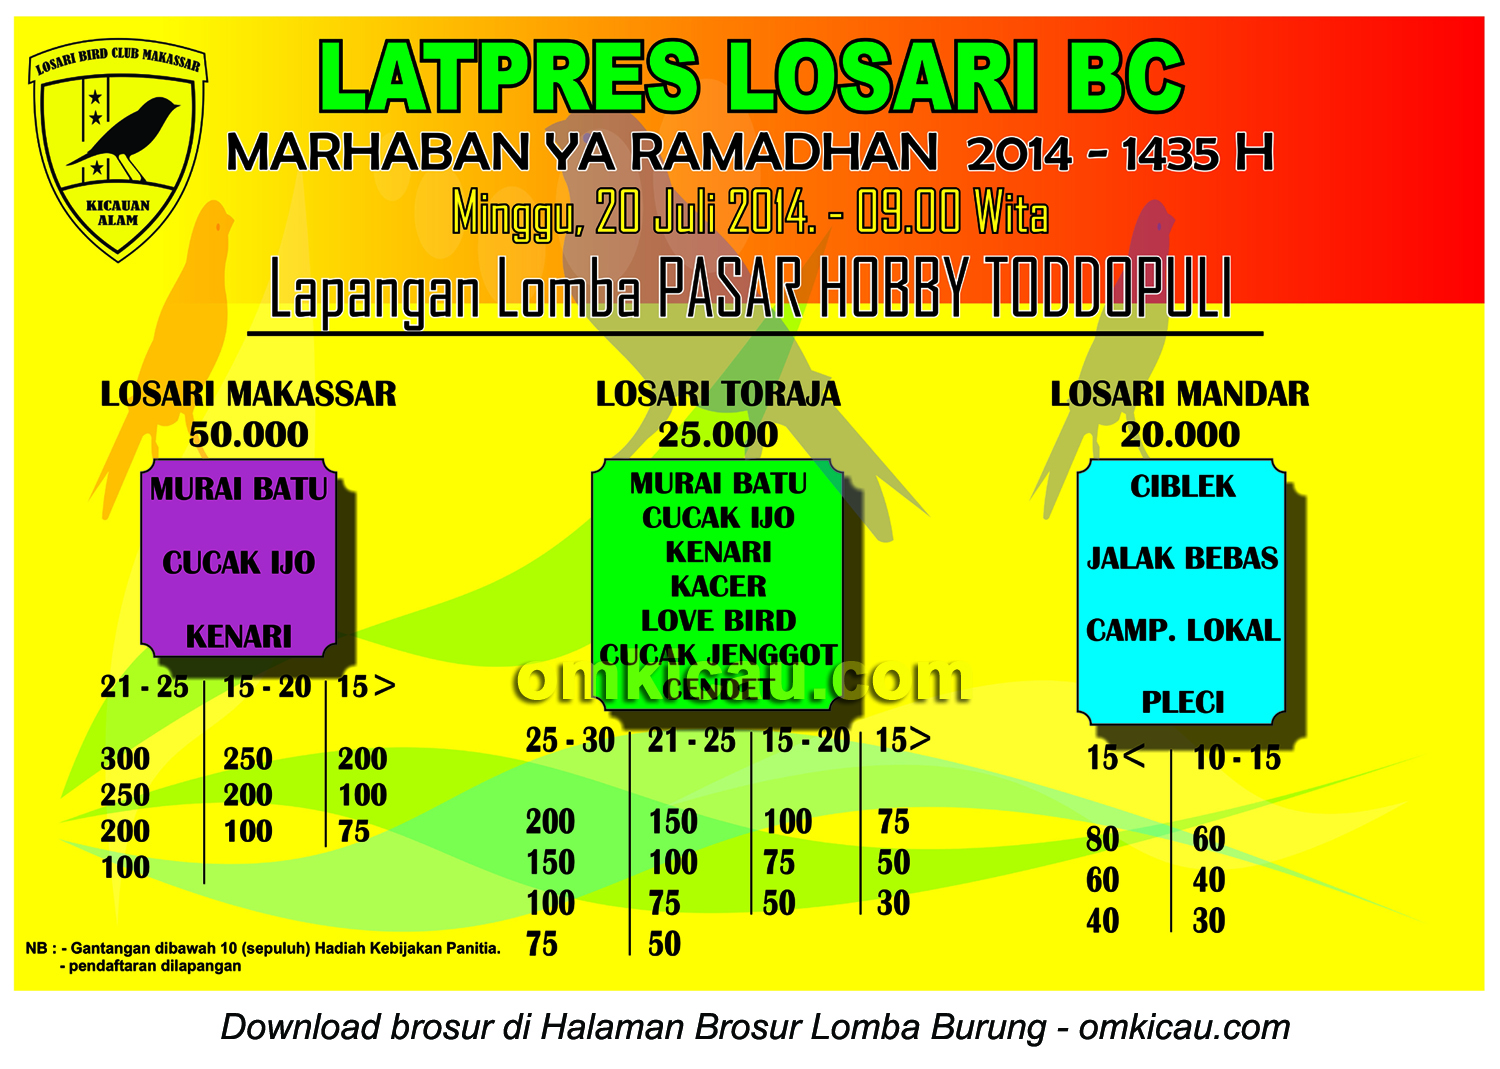 Brosur Latpres Marhaban Ya Ramadhan Losari BC, Makassar, 20 Juli 2014